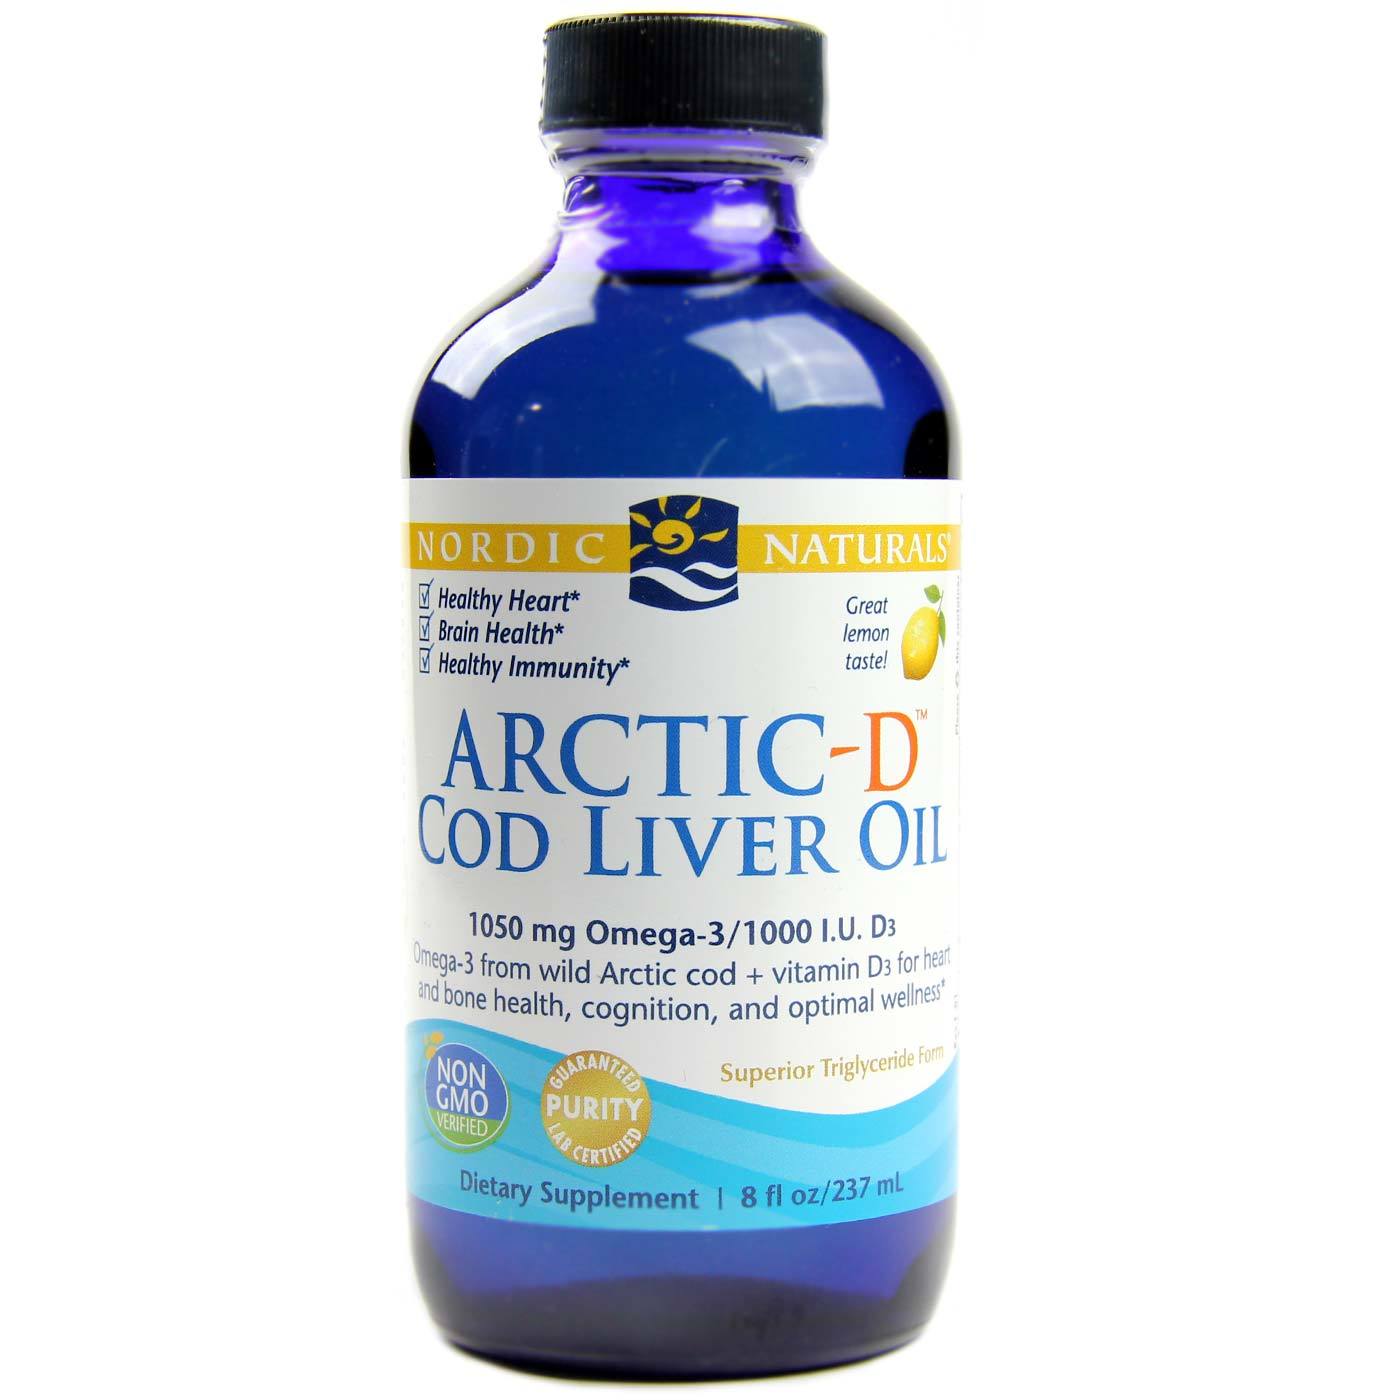 Nordic Naturals Omega-3 Plus Vitamin D Liquid - 8 oz bottle